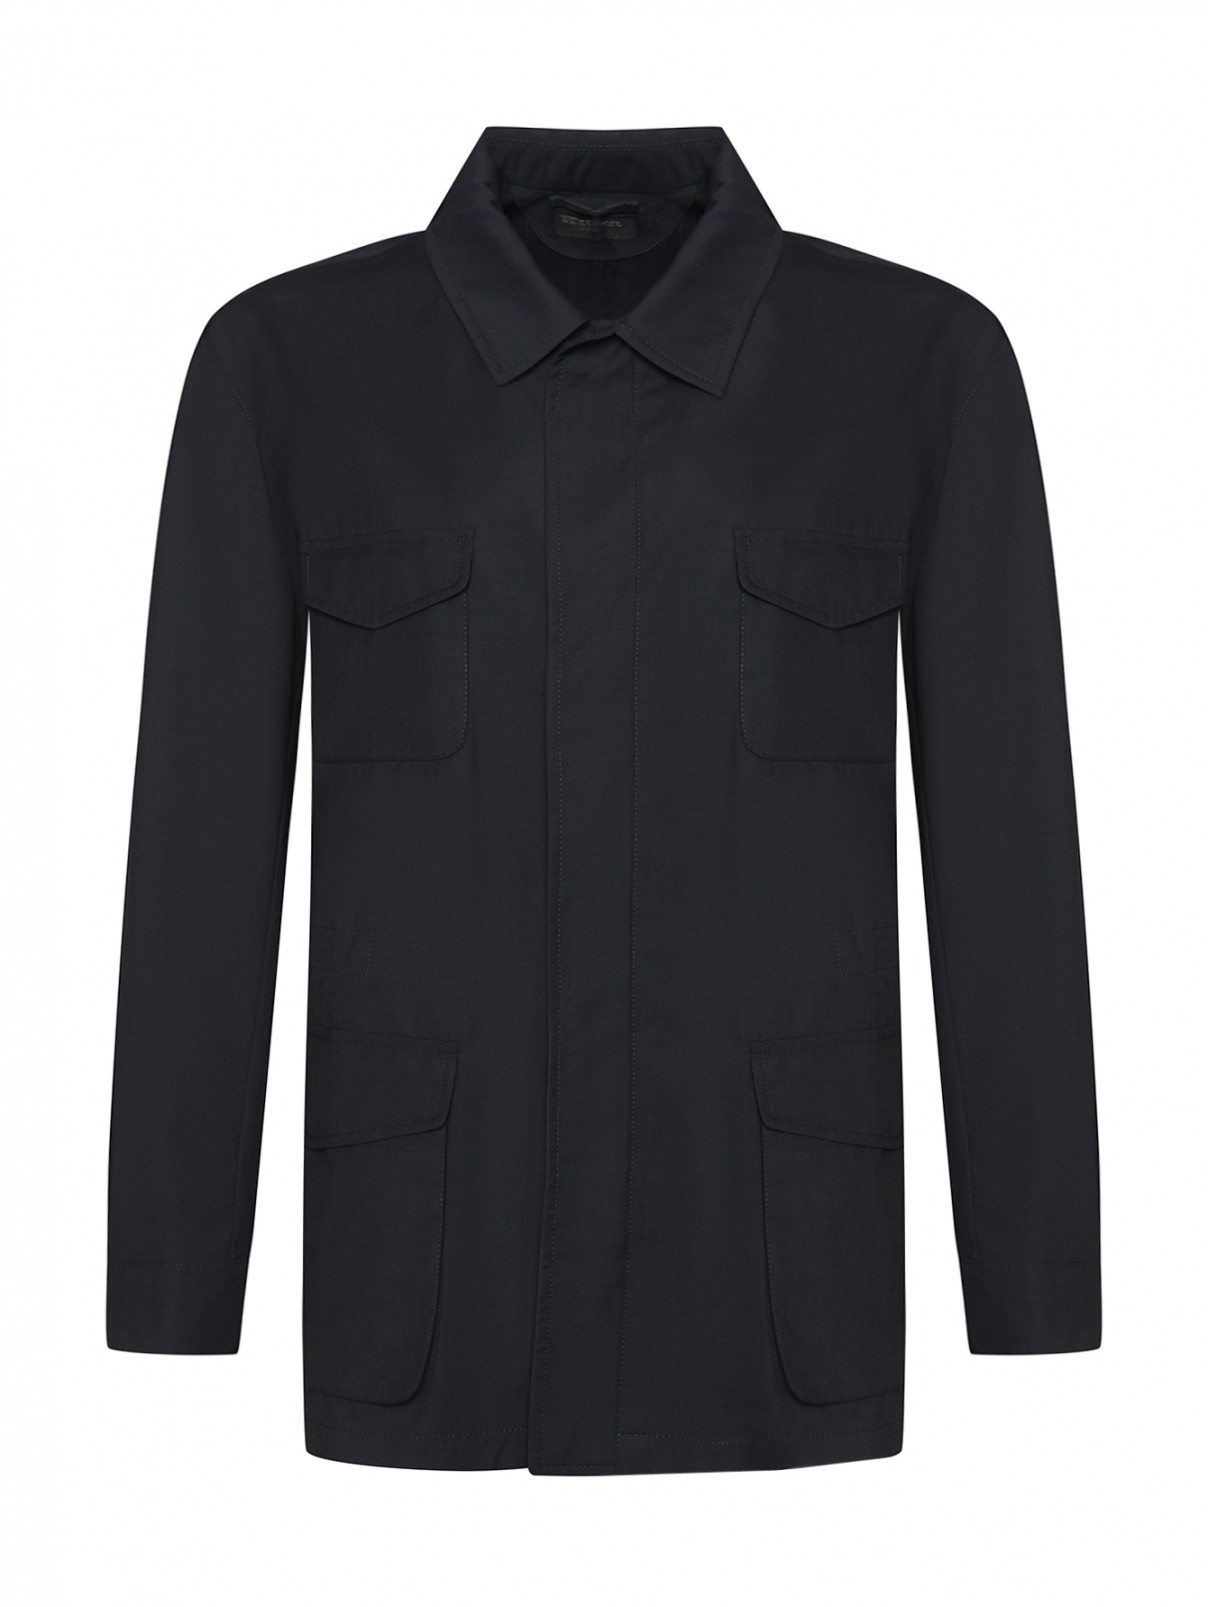 Куртка на молнии с накладными карманами Kiton  –  Общий вид